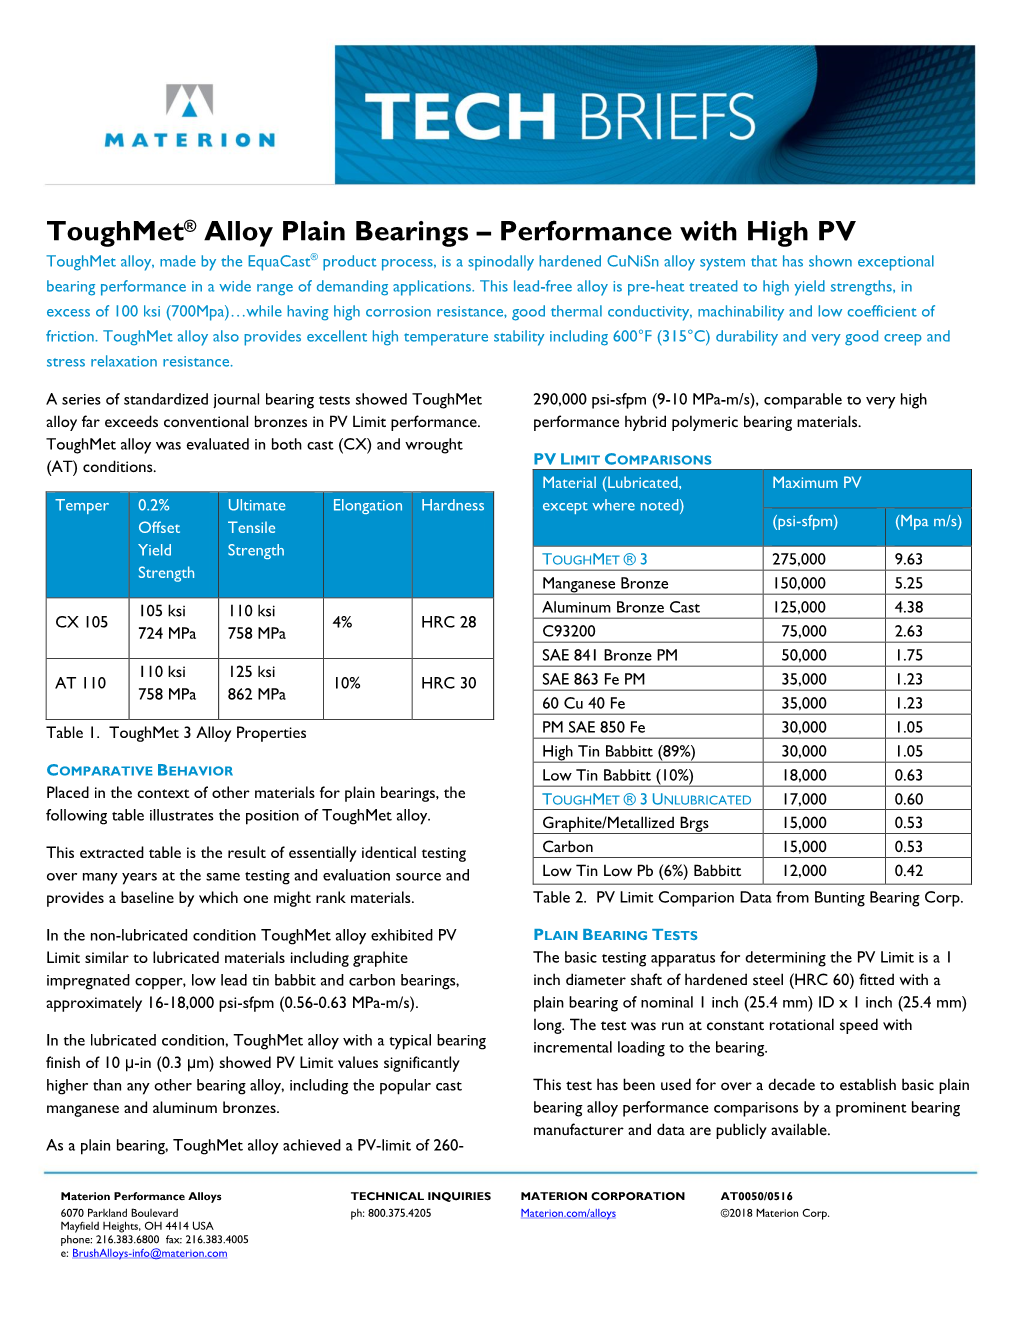 Toughmet Plain Bearing Performance with High PV